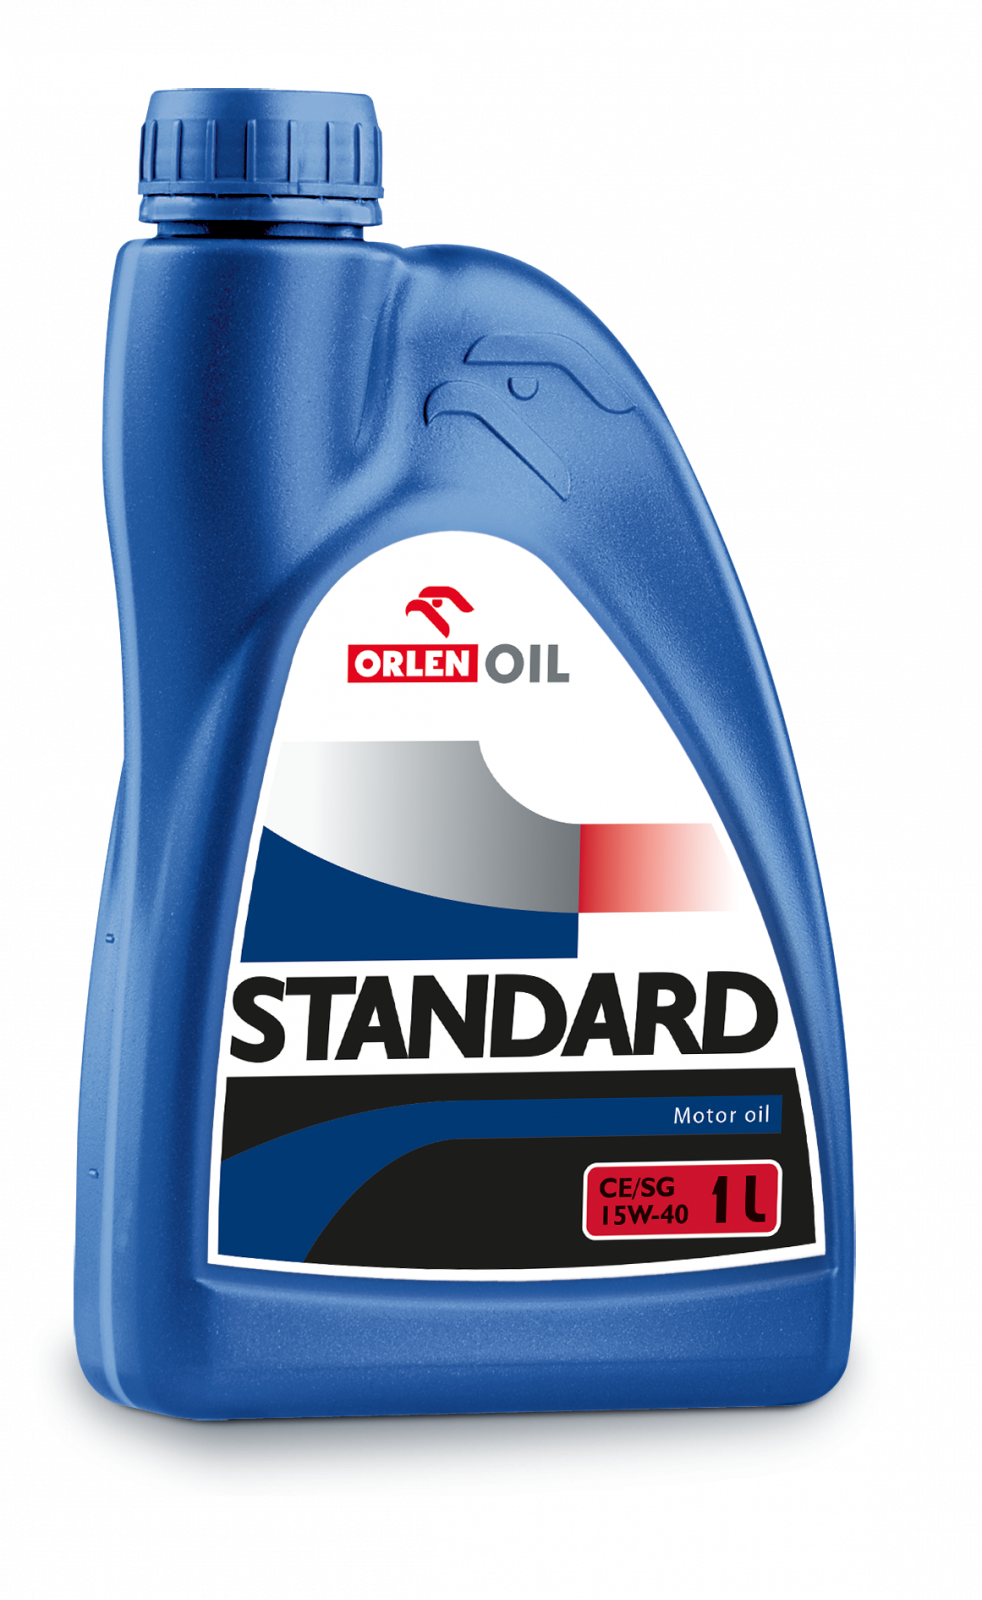 ORLEN OIL STANDARD CE/SG 15W-40 1l